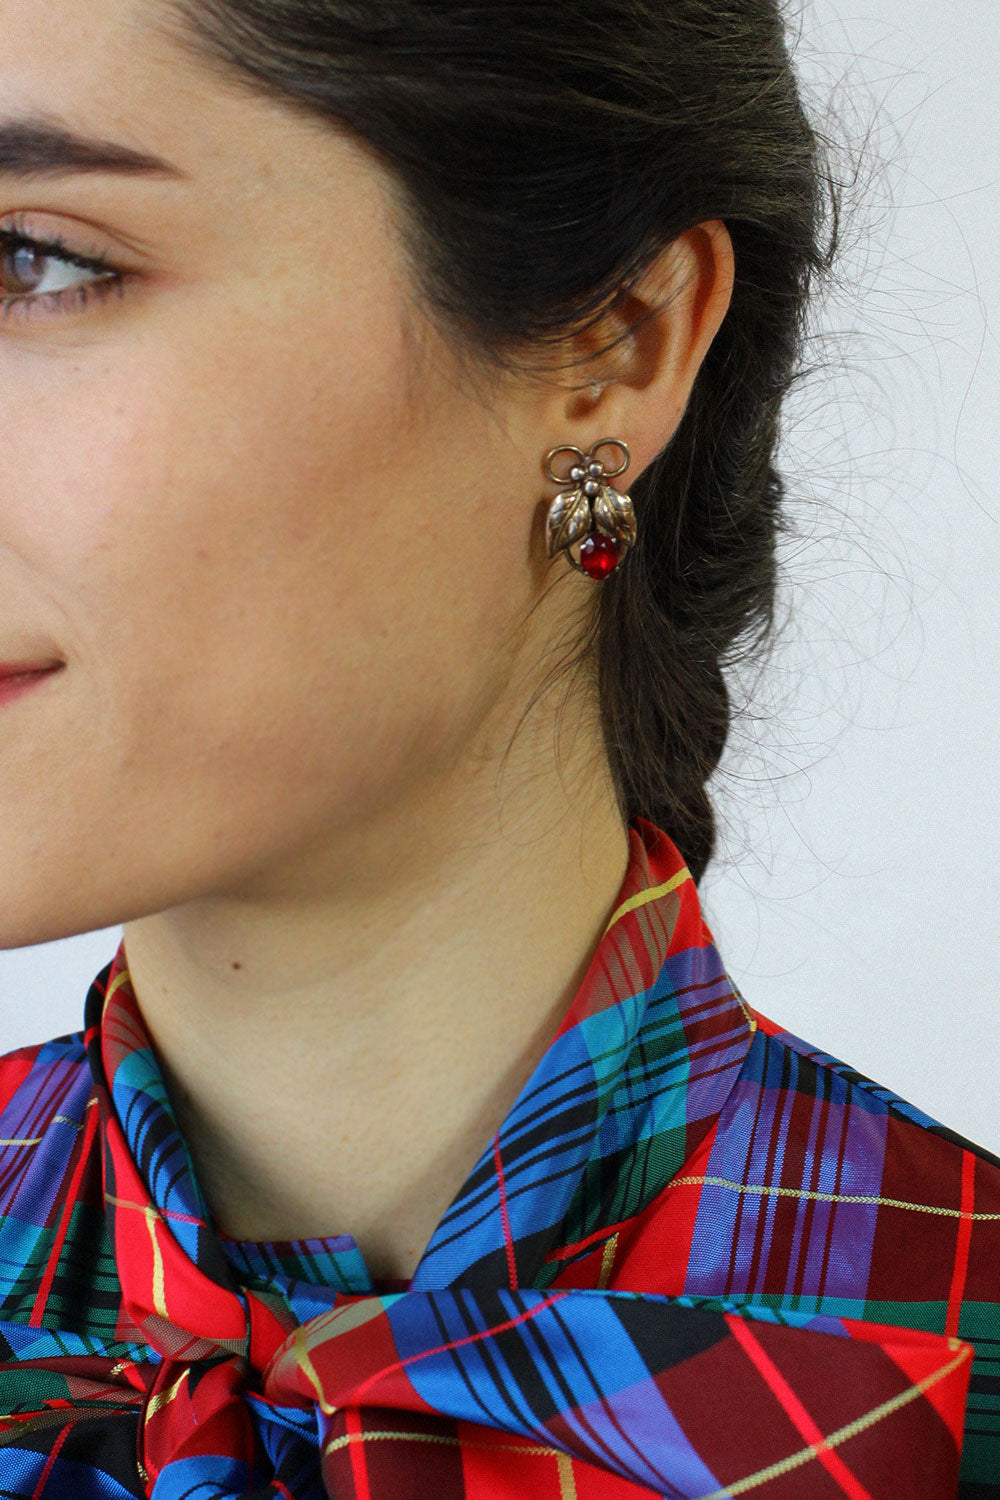 Raleigh Mistletoe Earrings